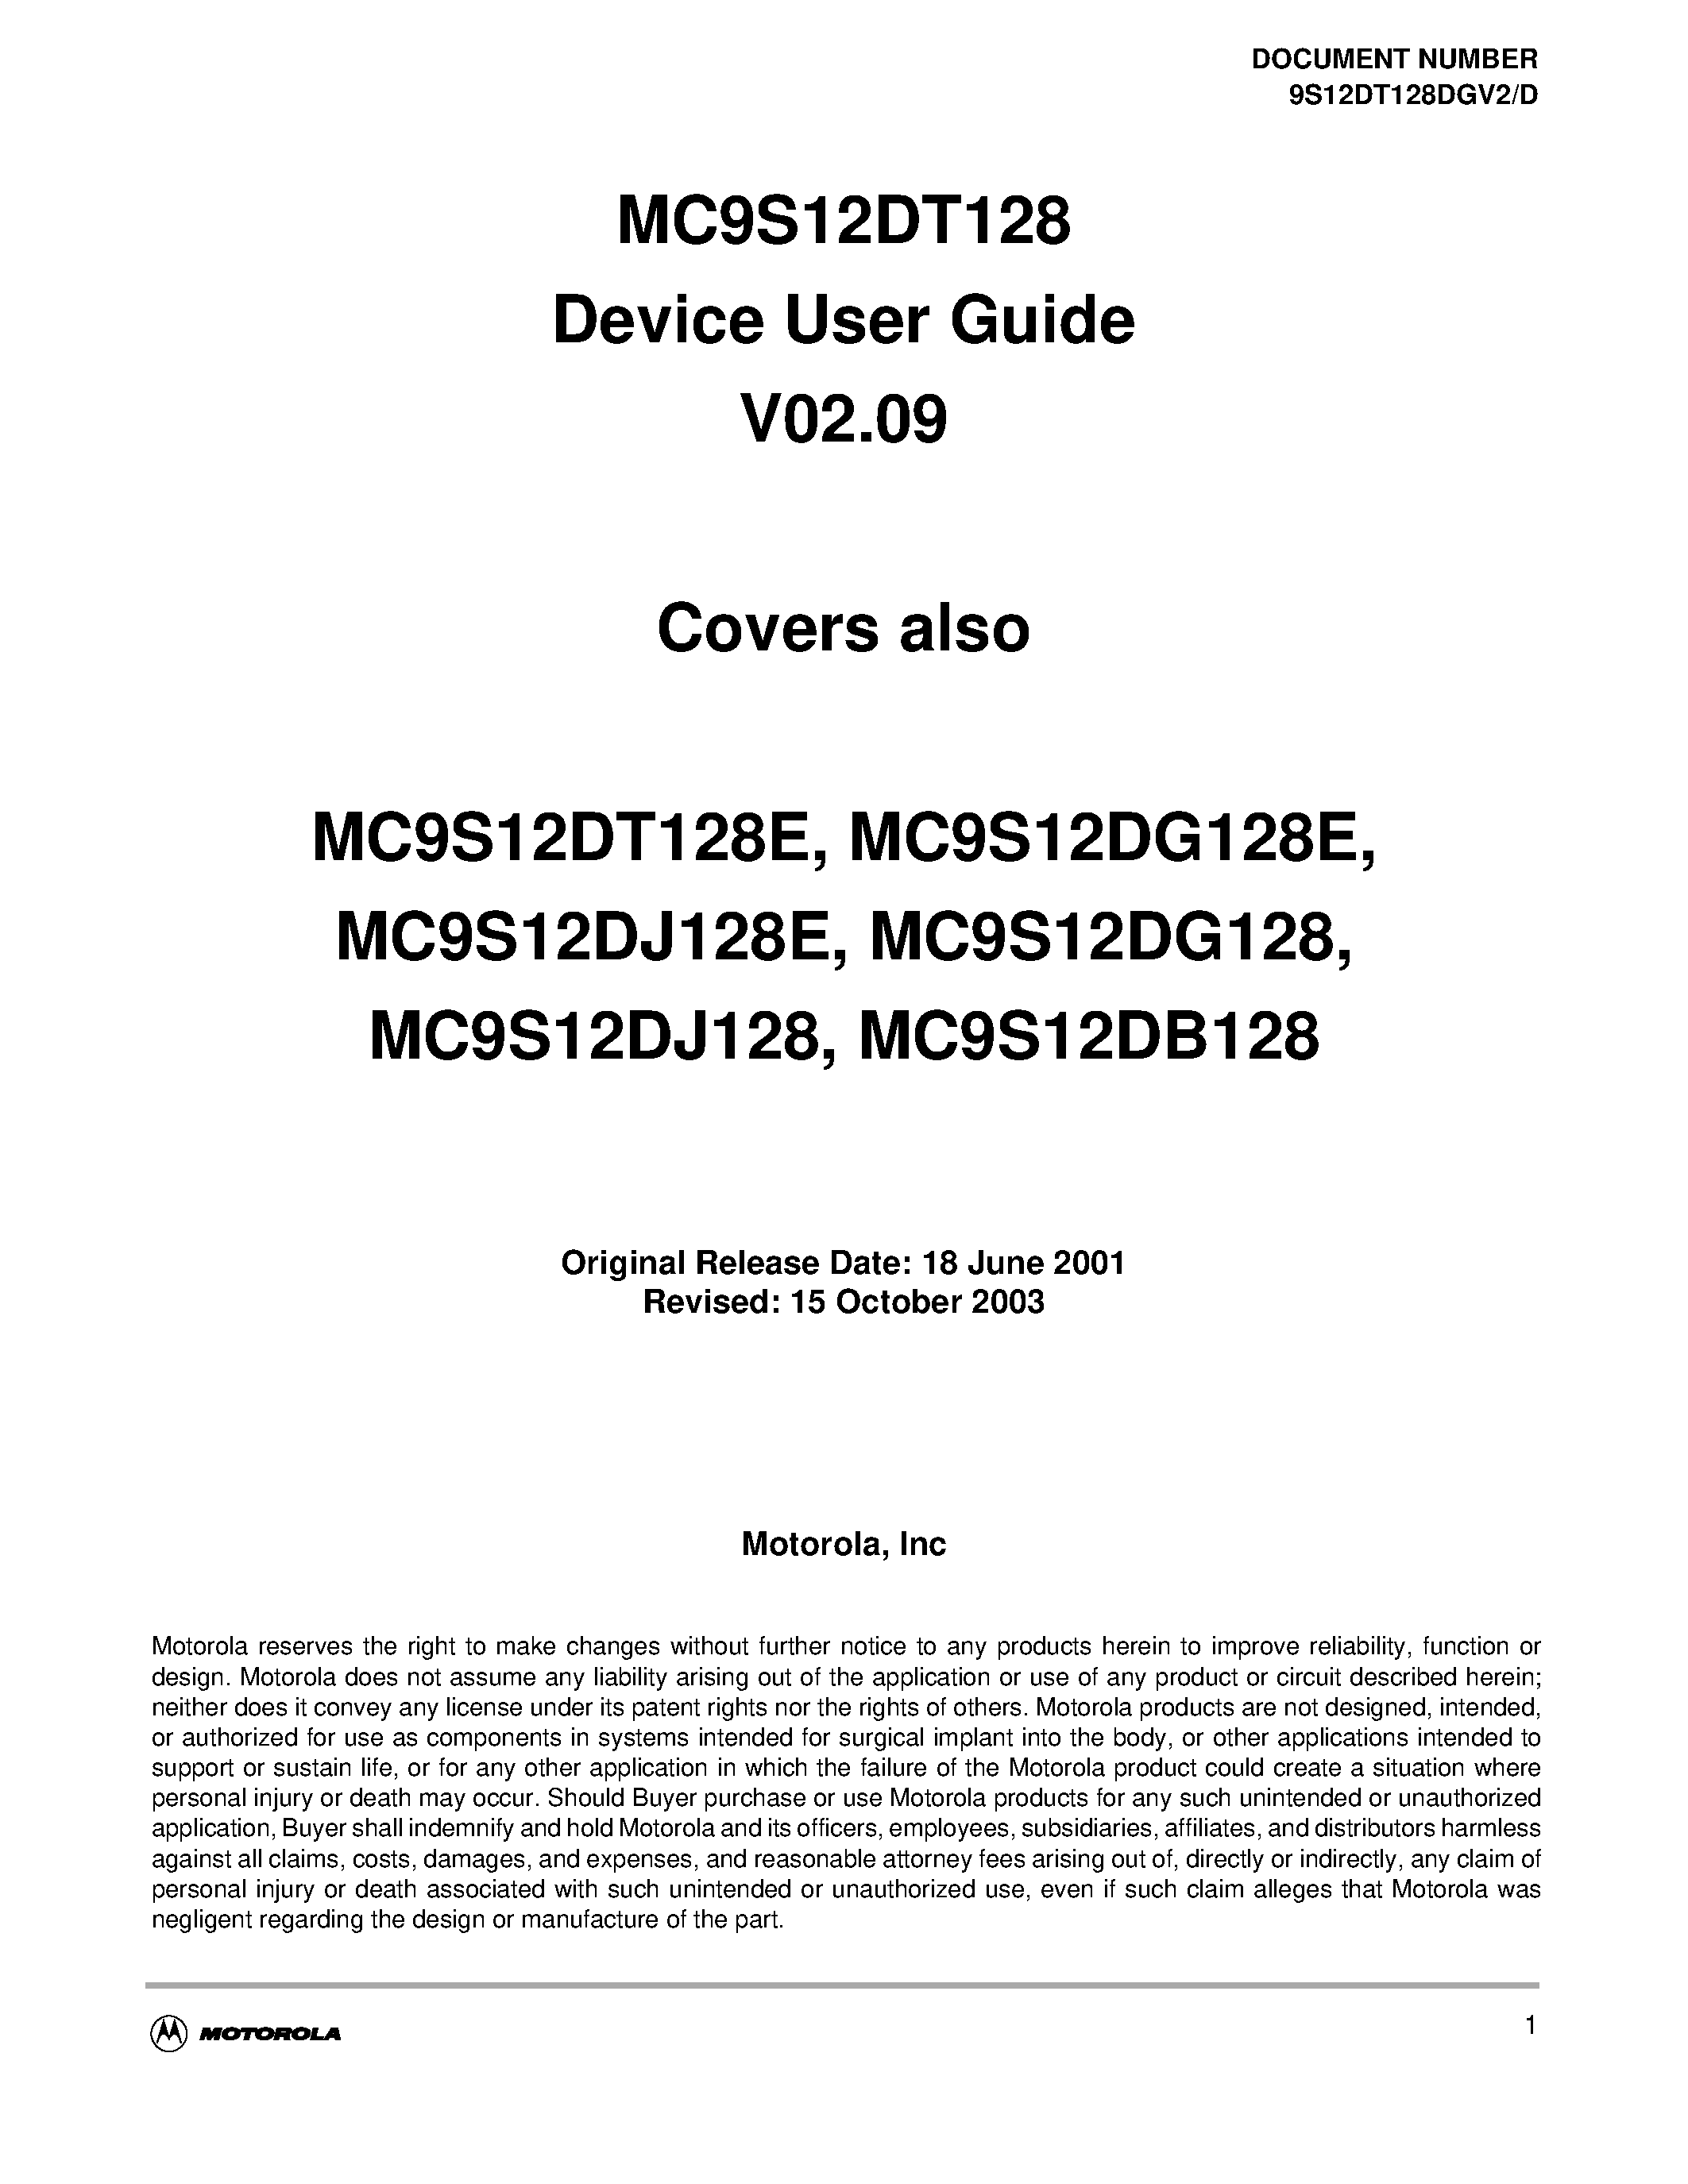 Даташит S12CPUV2 - MC9S12DT128 Device User Guide V02.09 страница 1